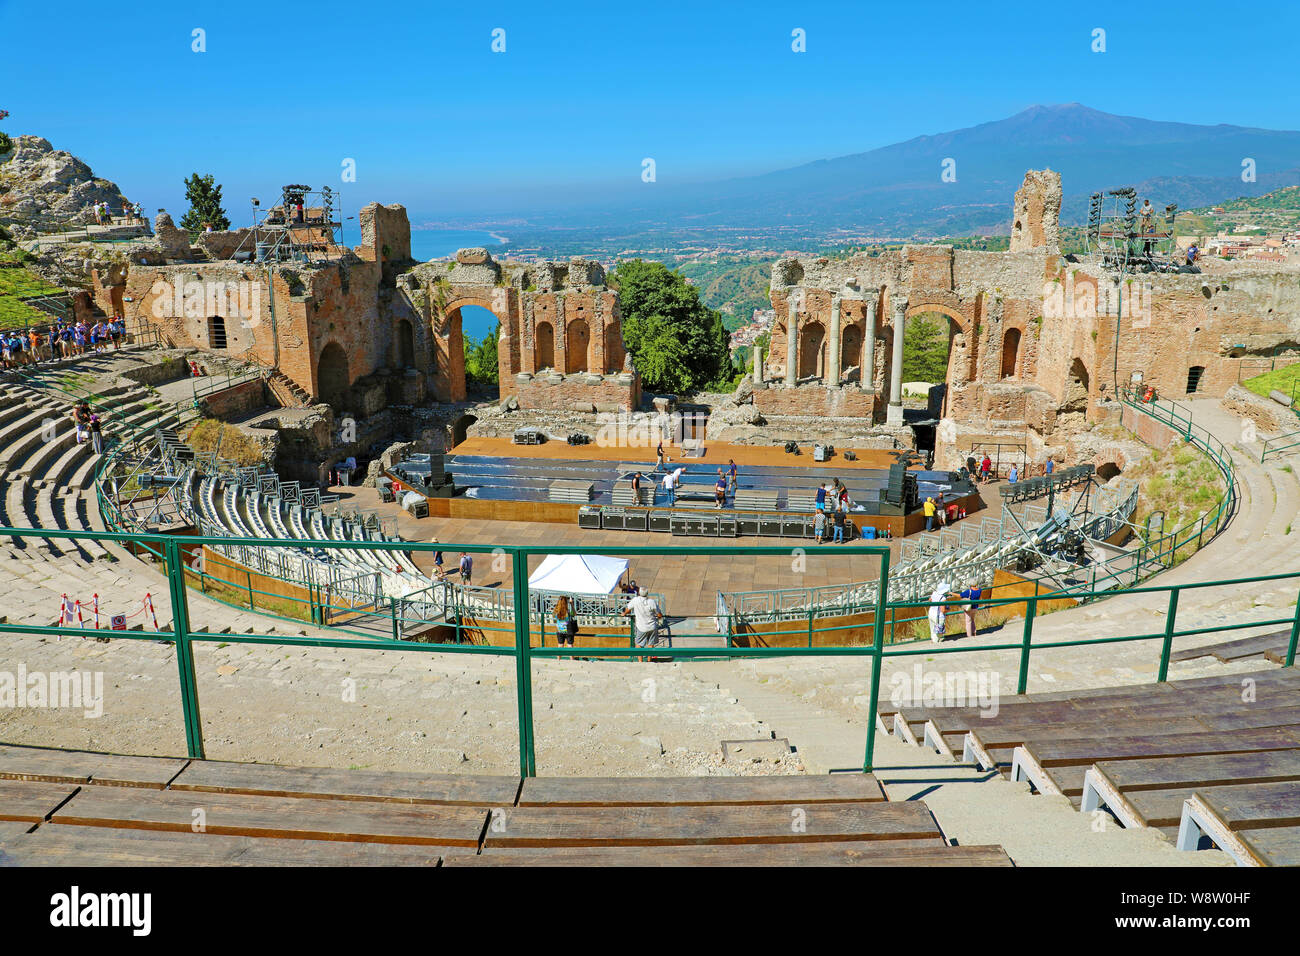 TAORMINA, ITALIE - 20 juin 2019 : ruines de l'ancien théâtre grec avec l'Etna et la mer Ionienne à l'arrière-plan, Taormina, Sicile Banque D'Images